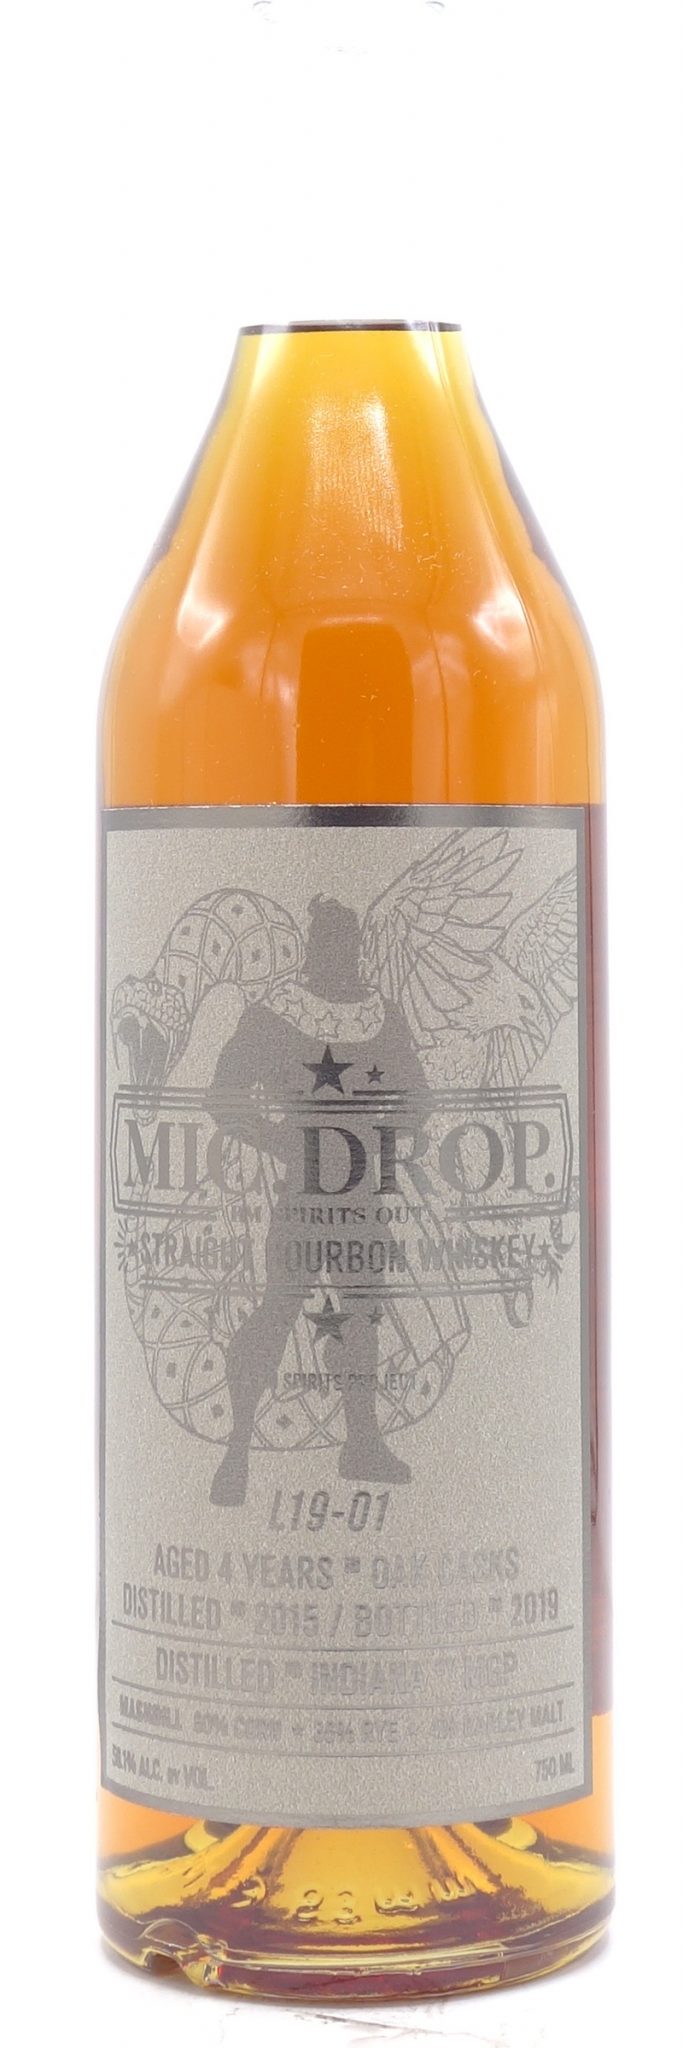 2019 Mic Drop Bourbon Whiskey 4 Year Old, MGP 3rd Release (2019) 750ml